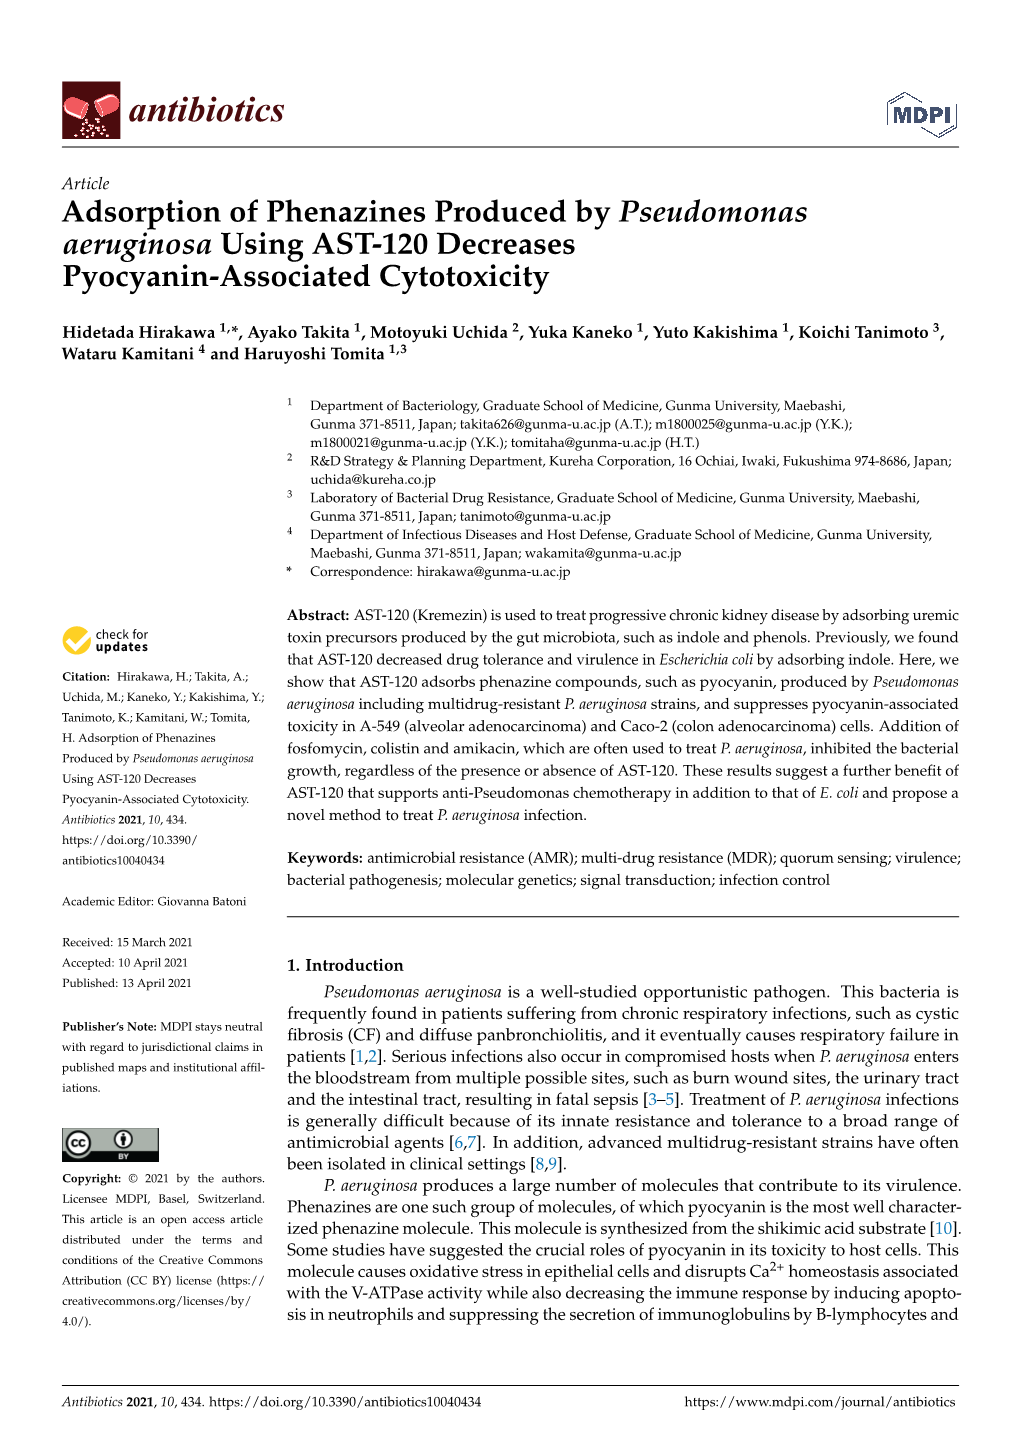 Adsorption of Phenazines Produced by Pseudomonas Aeruginosa Using AST-120 Decreases Pyocyanin-Associated Cytotoxicity